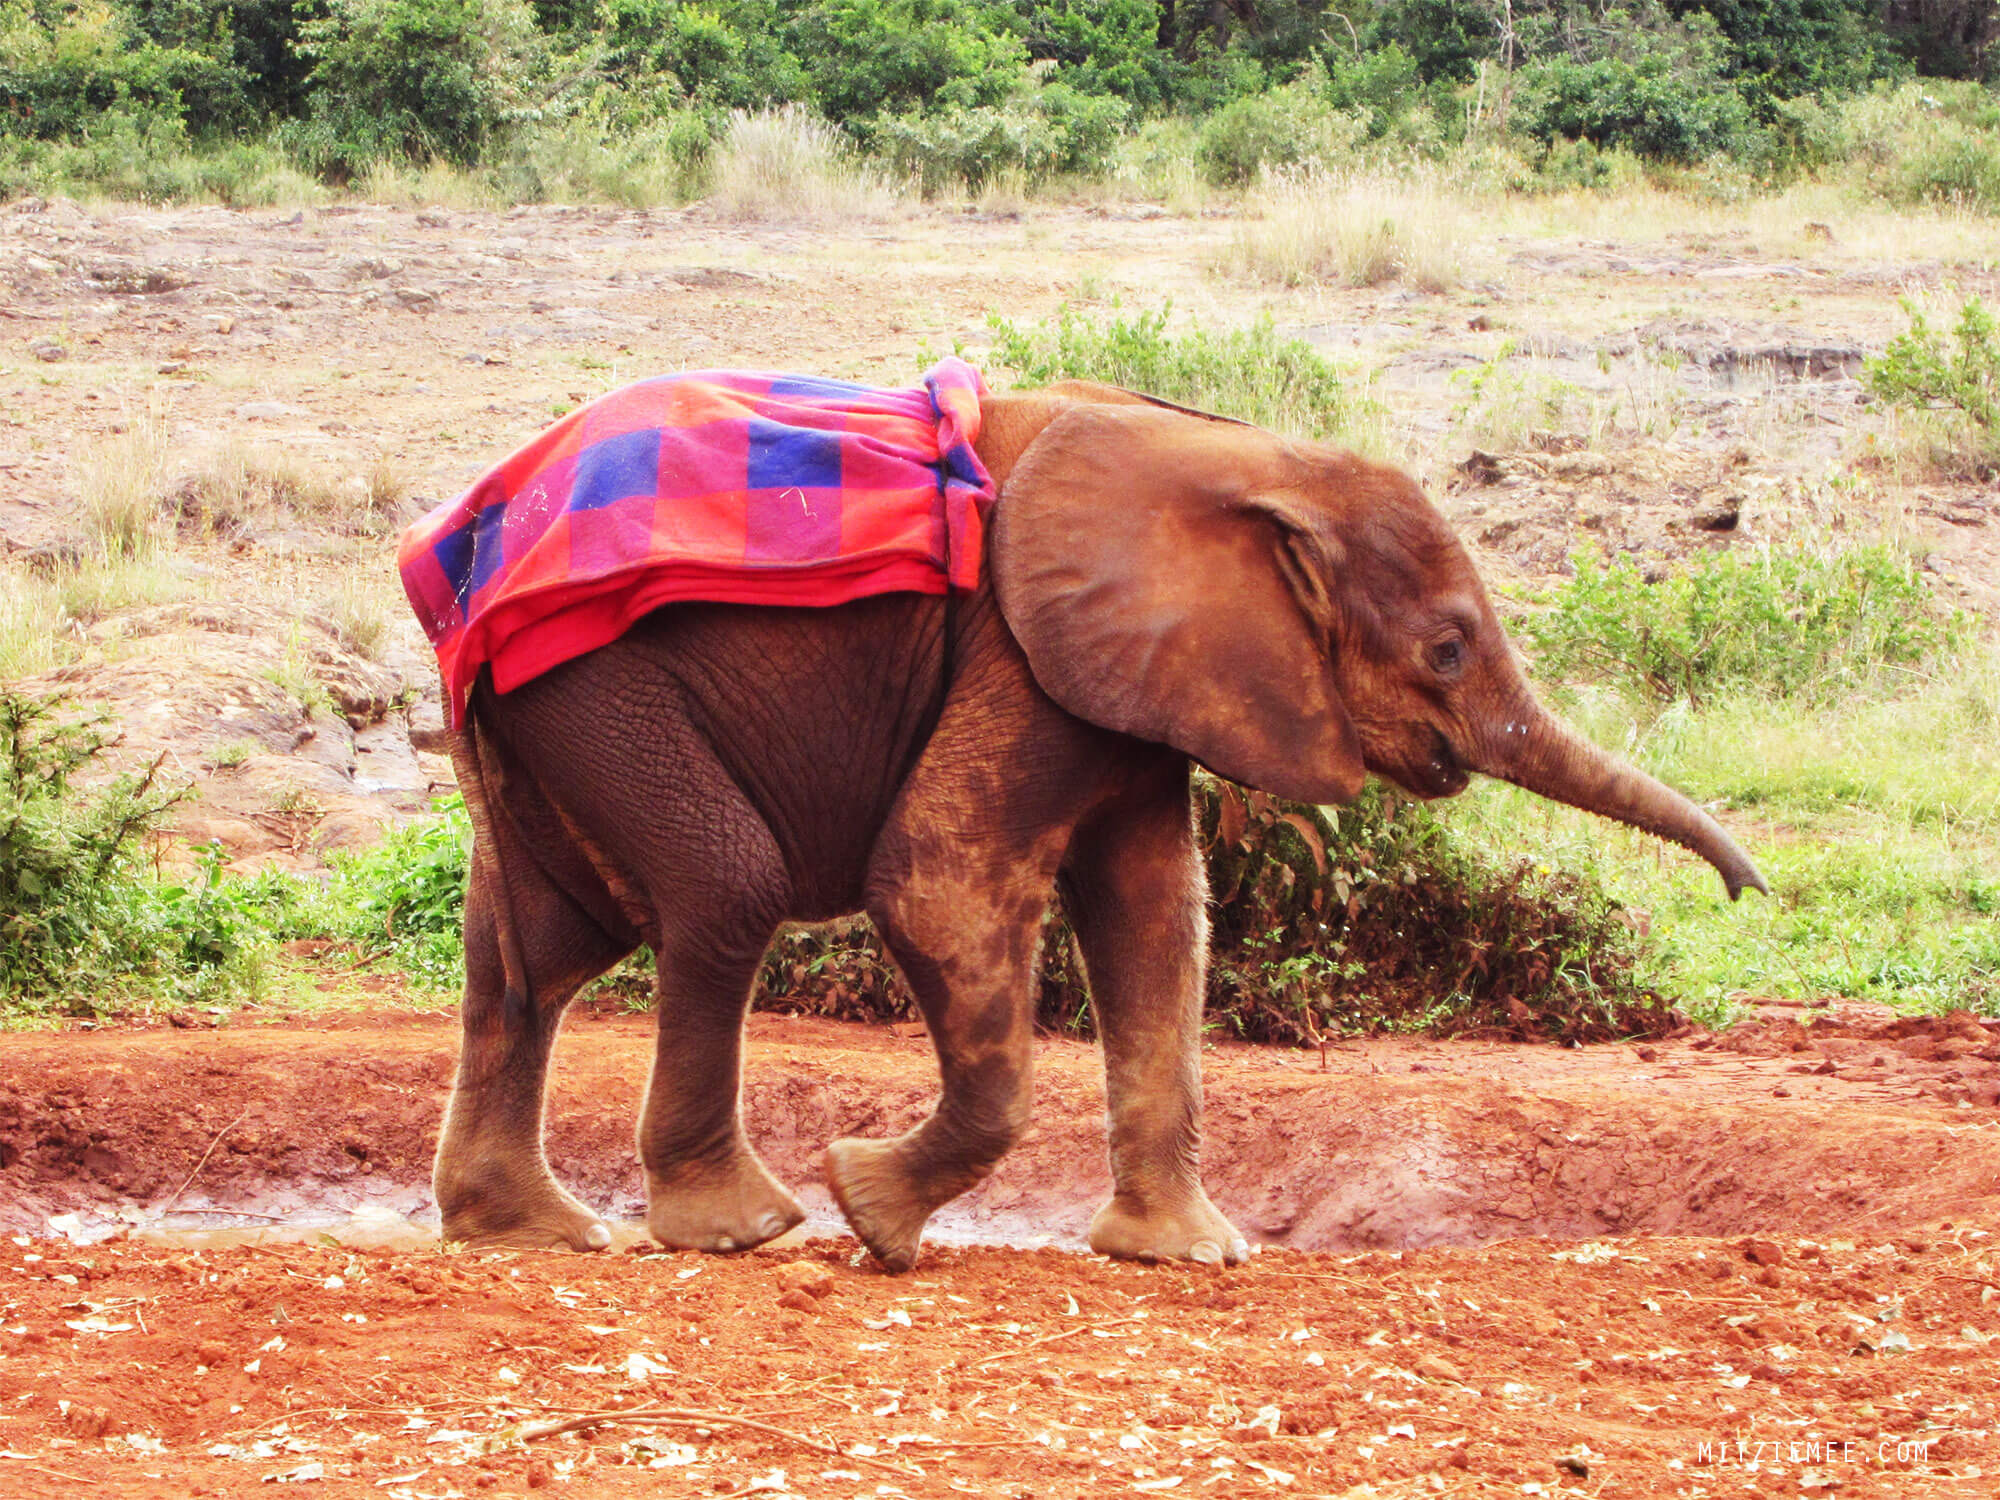 Baby elephant at the Sheldrick Wildlife Trust Elephant Nursery in Nairobi